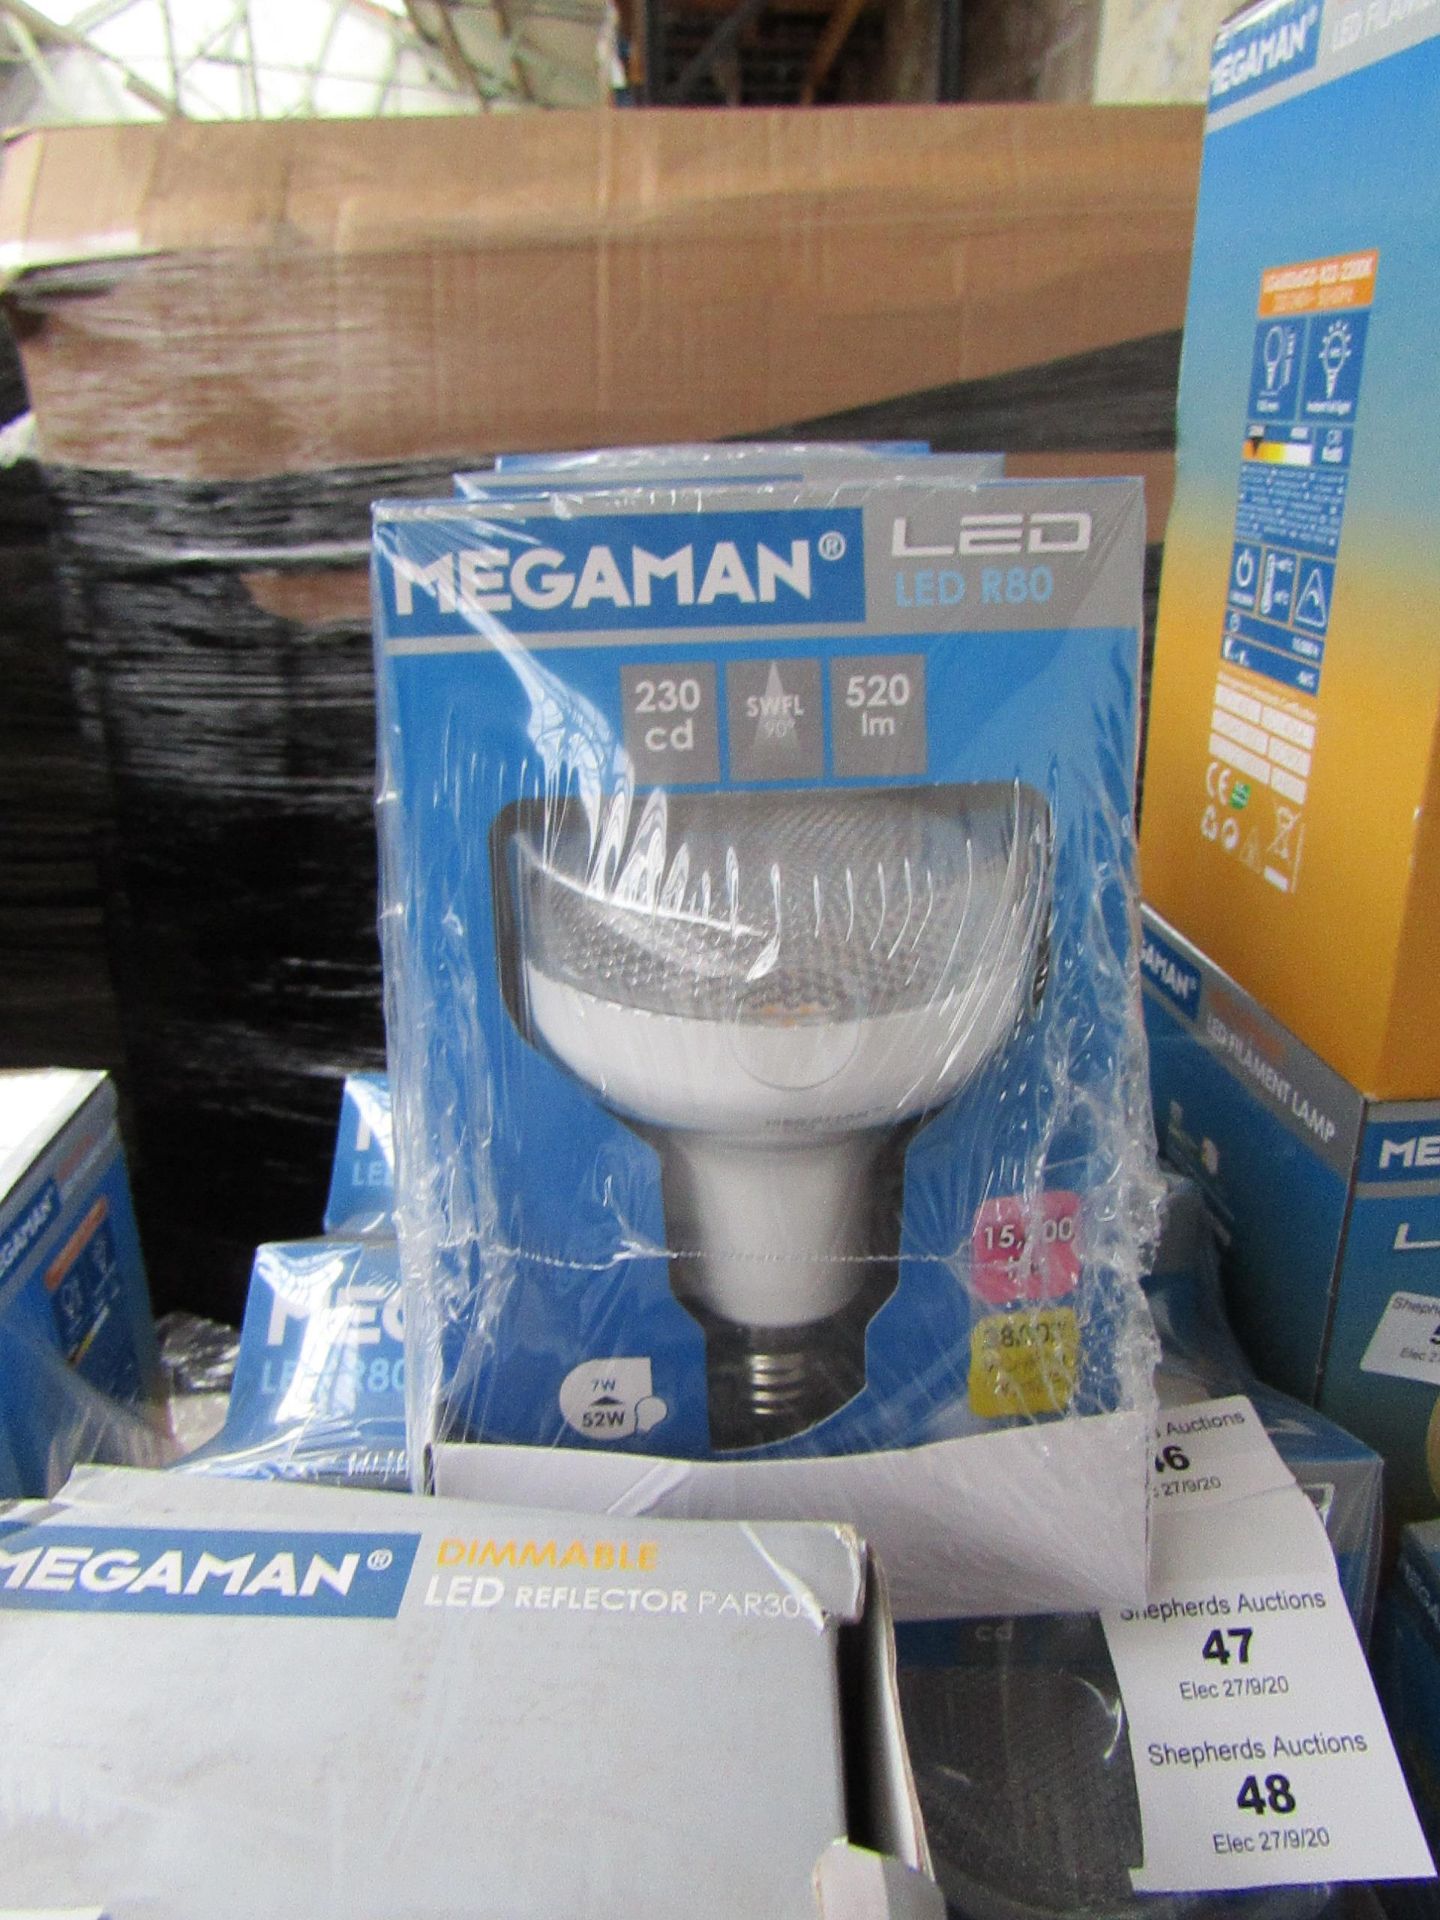 3x Megaman LED R80 bulb, new and boxed. 15,000Hrs / E27 / 520 Lumens